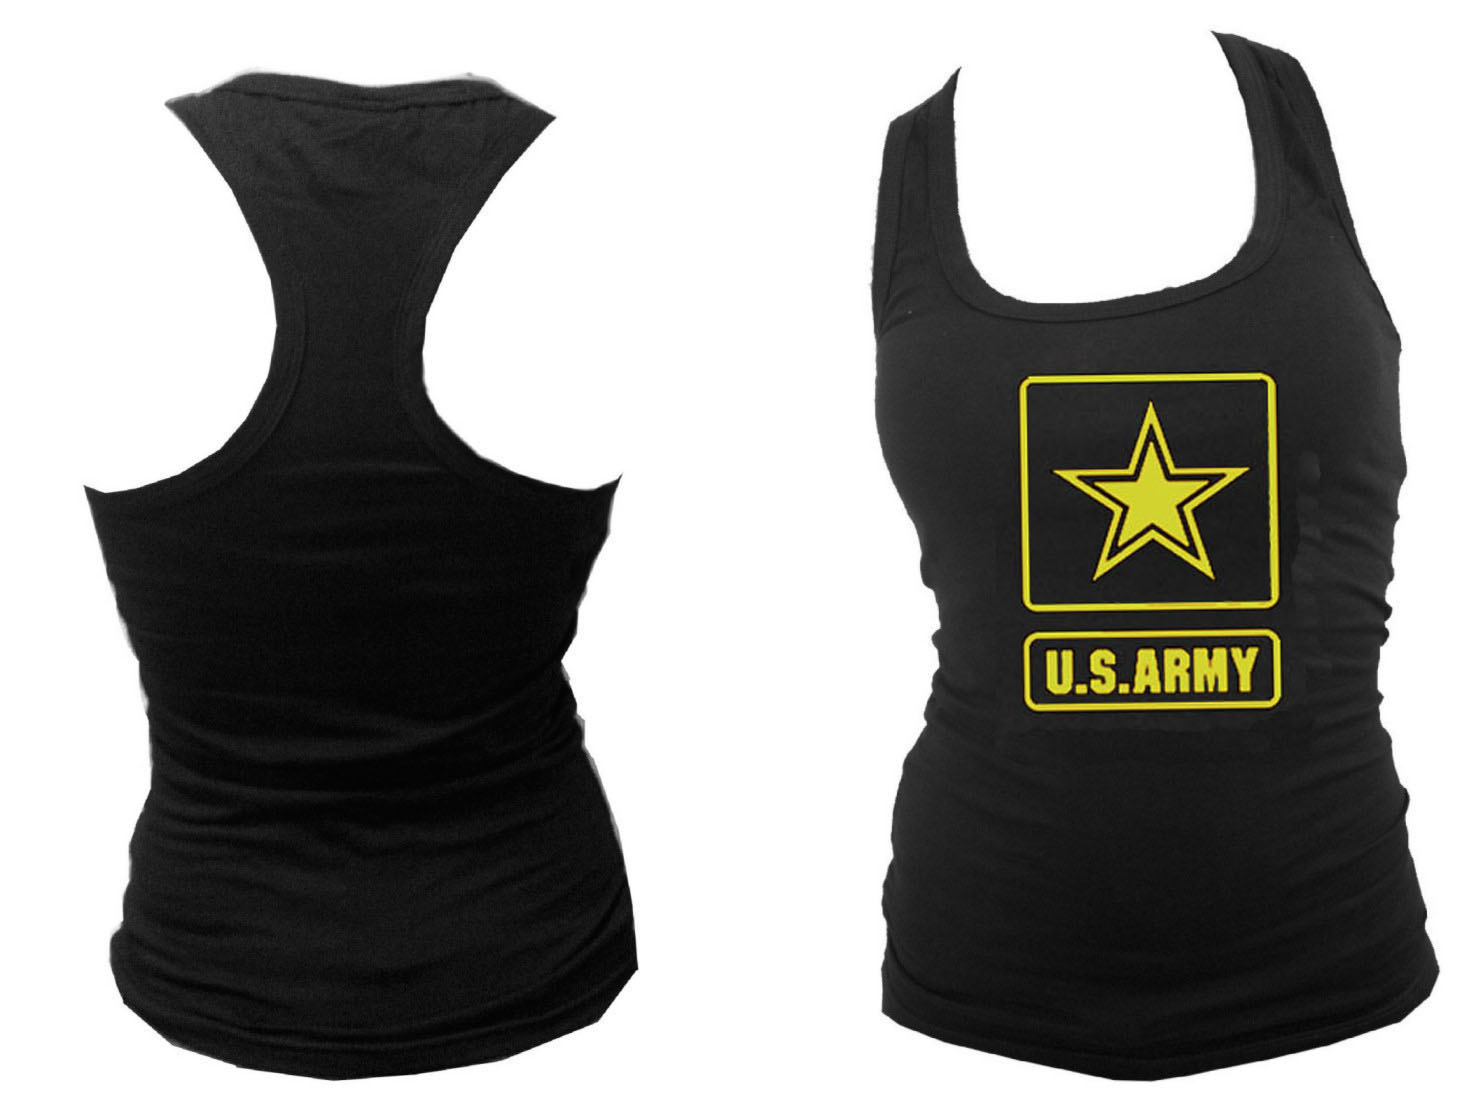 US army emblem sleeveless women black tank top S/M